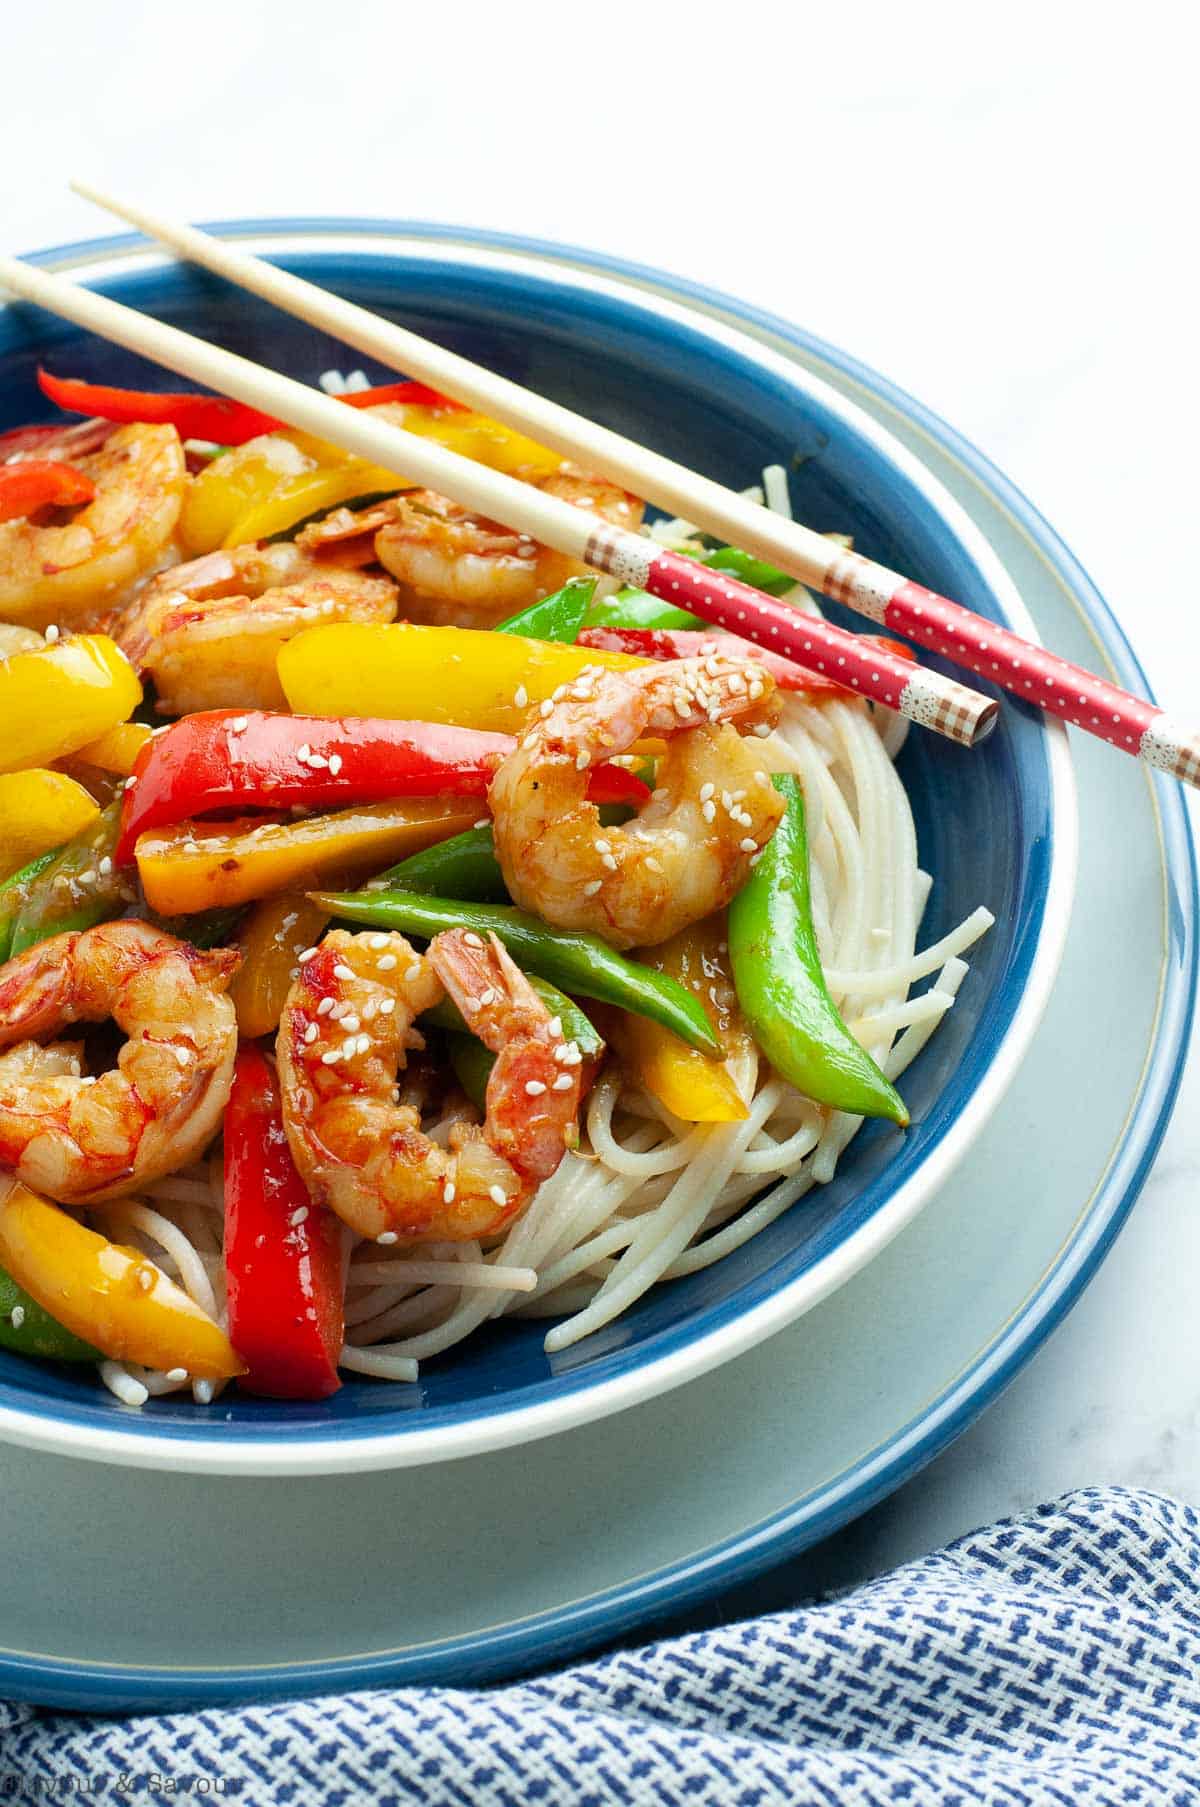 a bowl of stir fry over noodles with shrimp